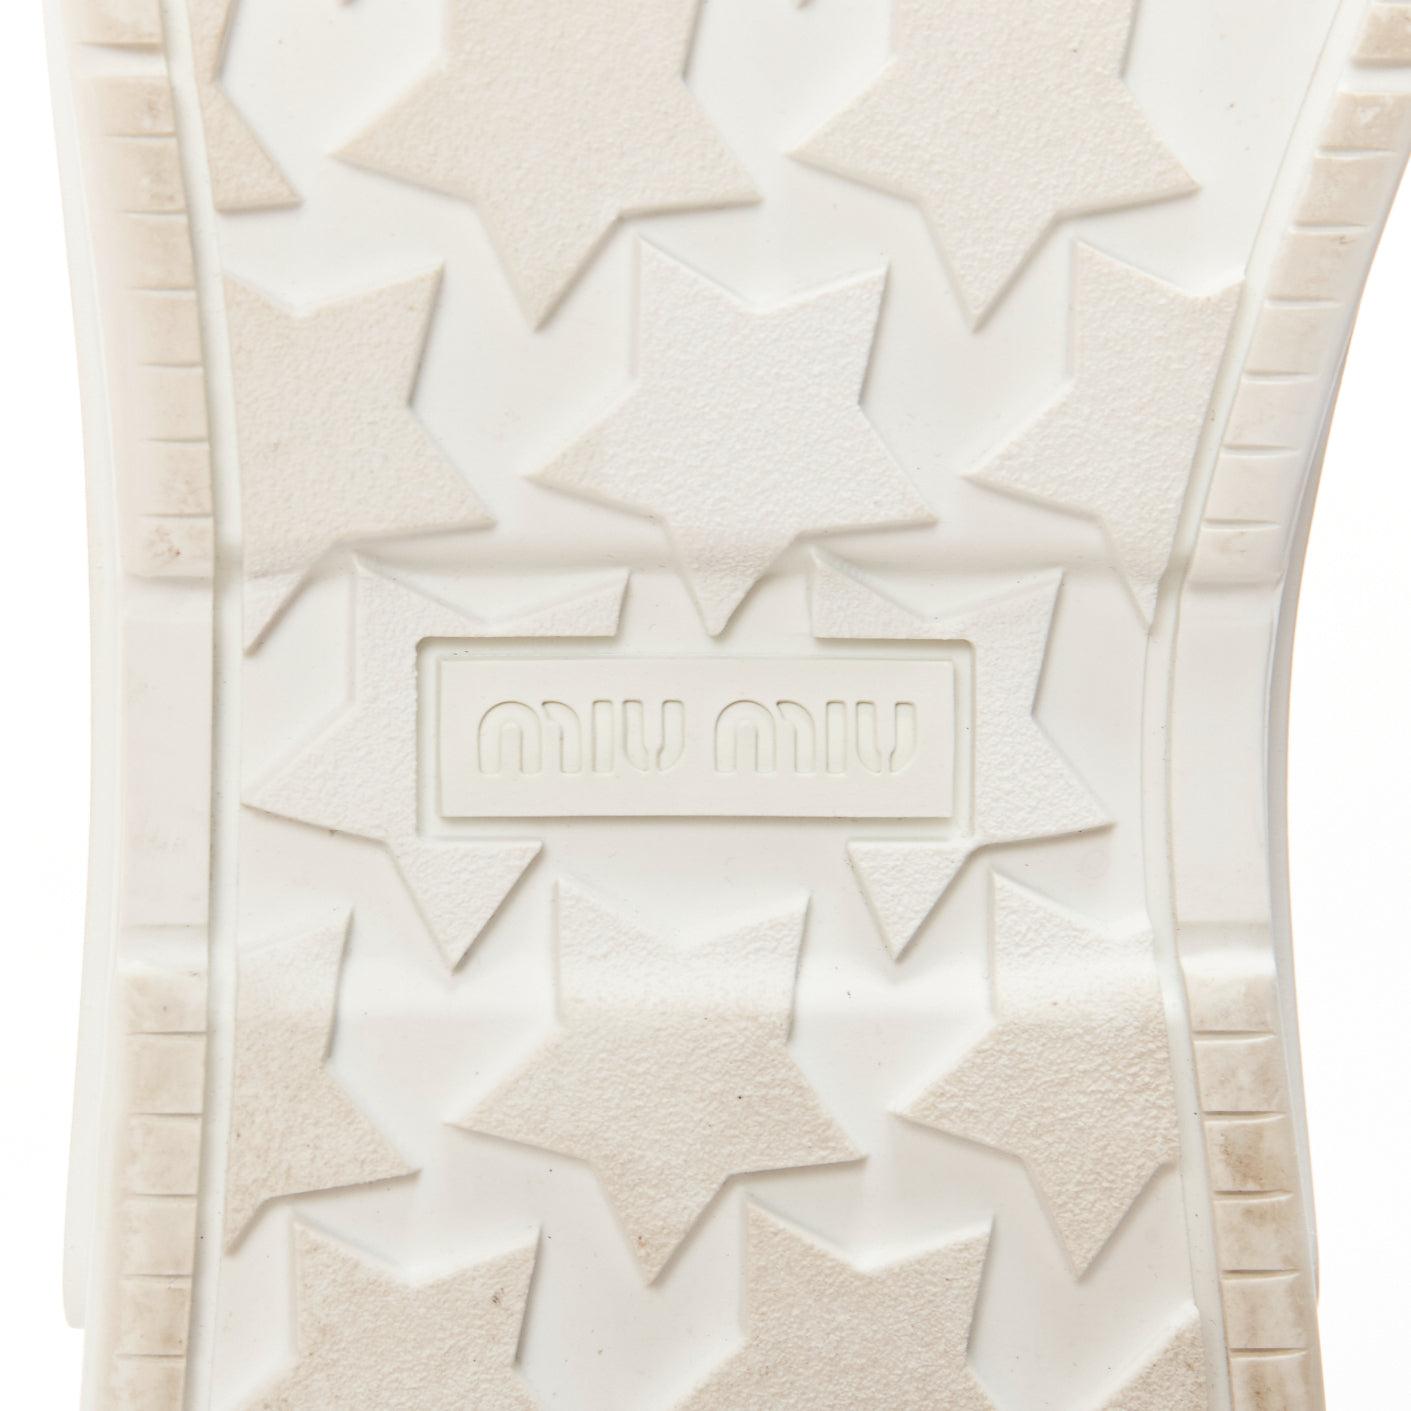 MIU MIU white leather logo tongue clear big crystal heels chunky sneakers EU38 For Sale 6